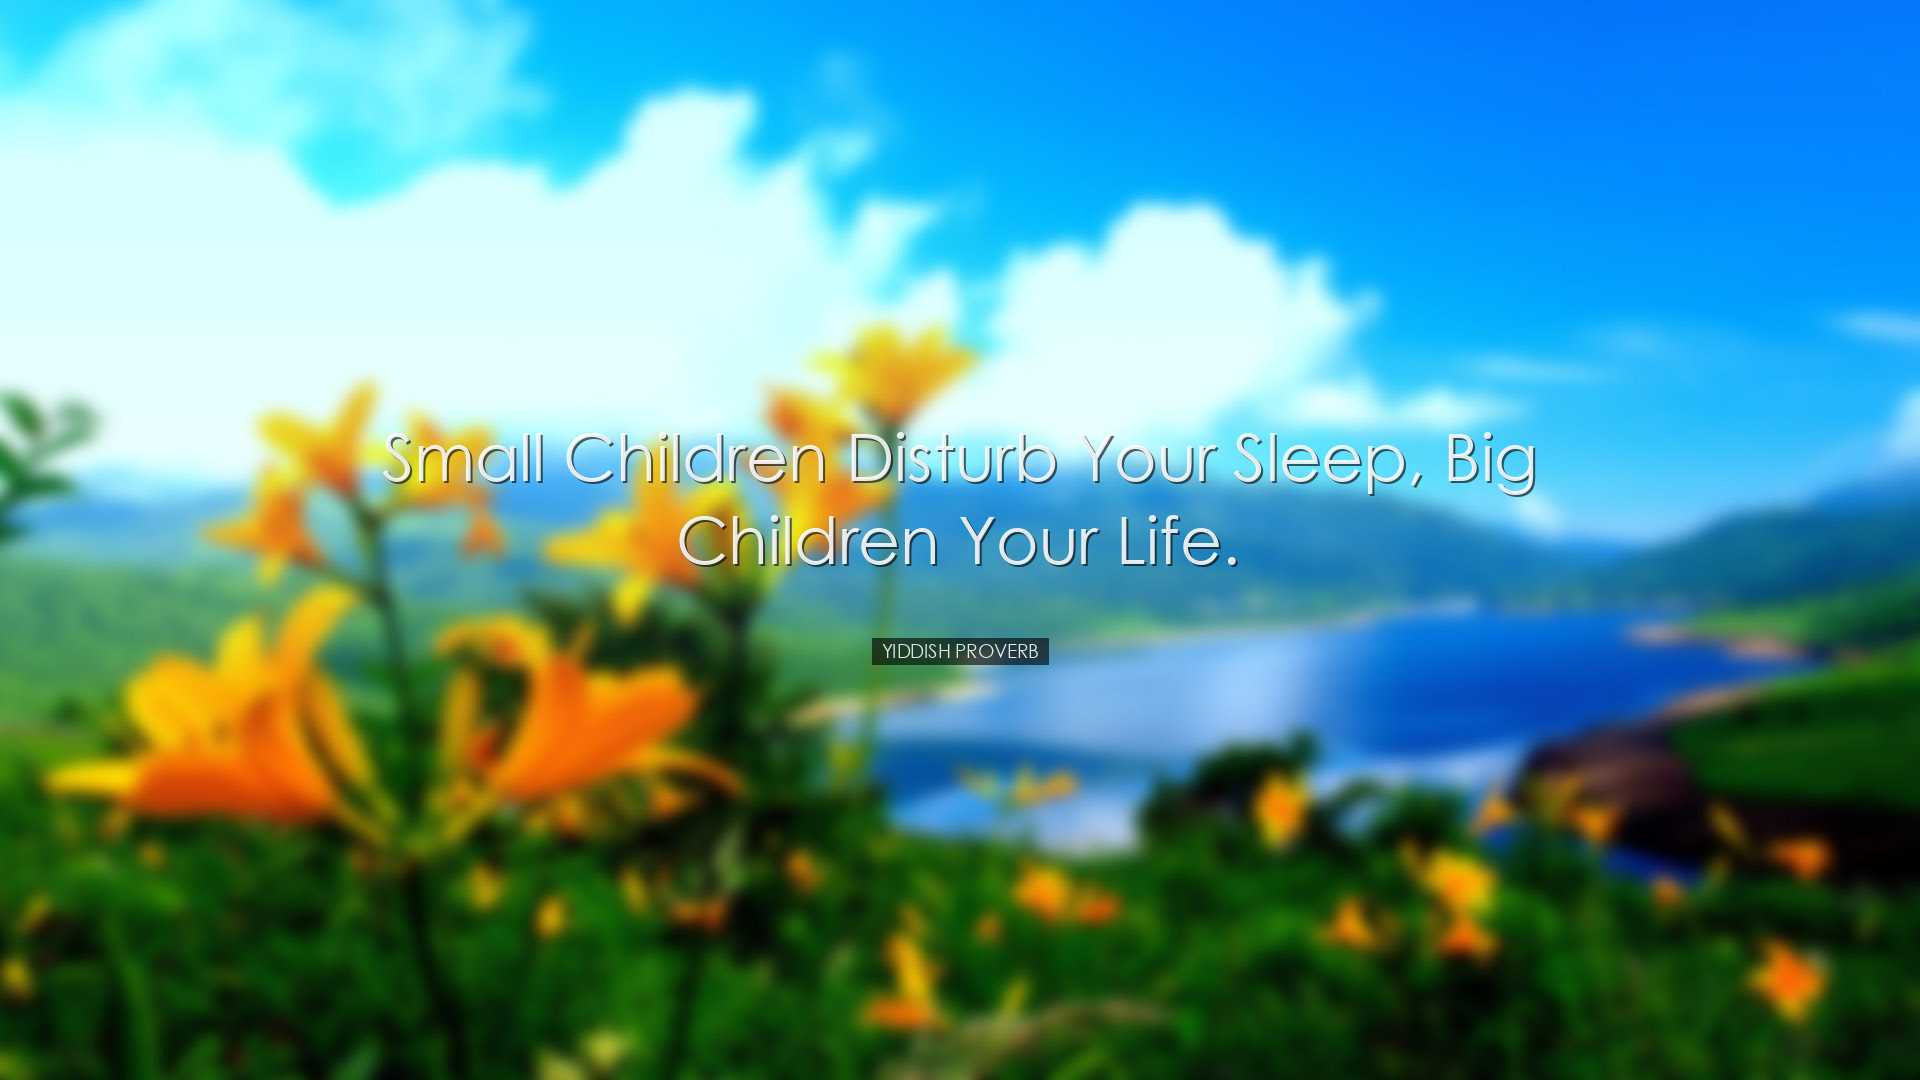 Small children disturb your sleep, big children your life. - Yiddi